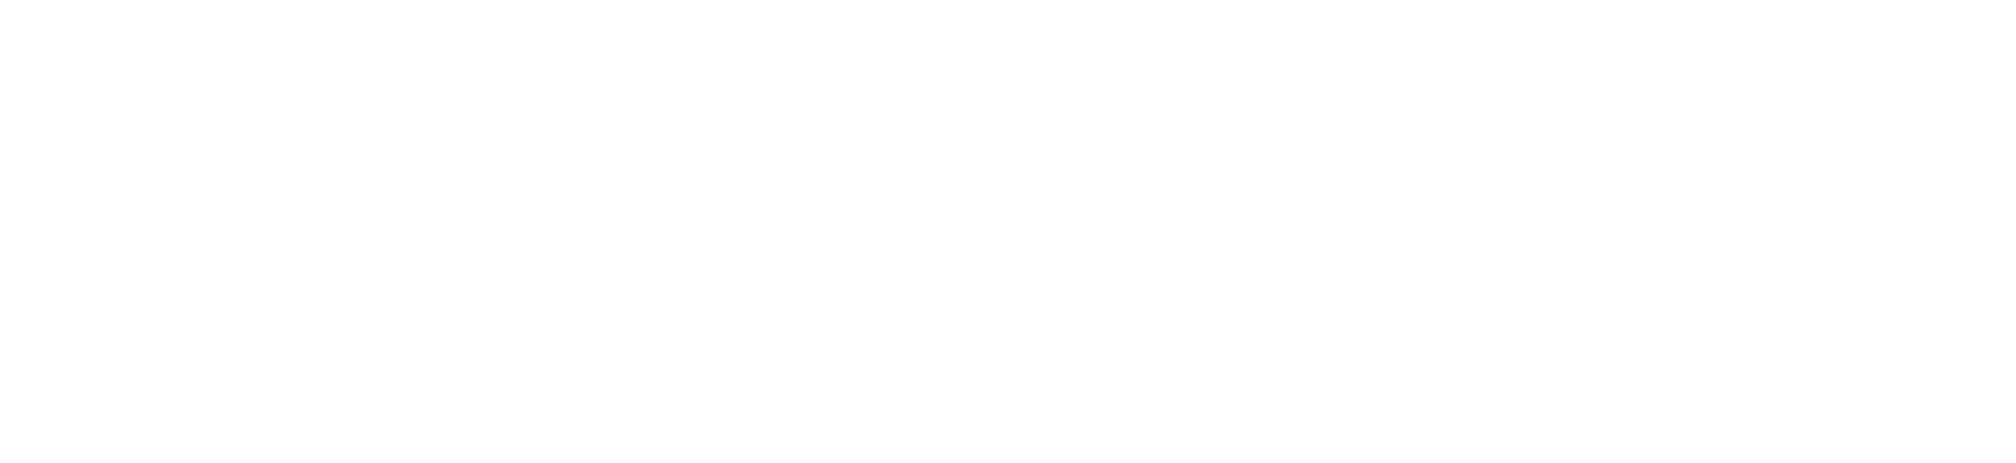 zekes3d main logo transparent background